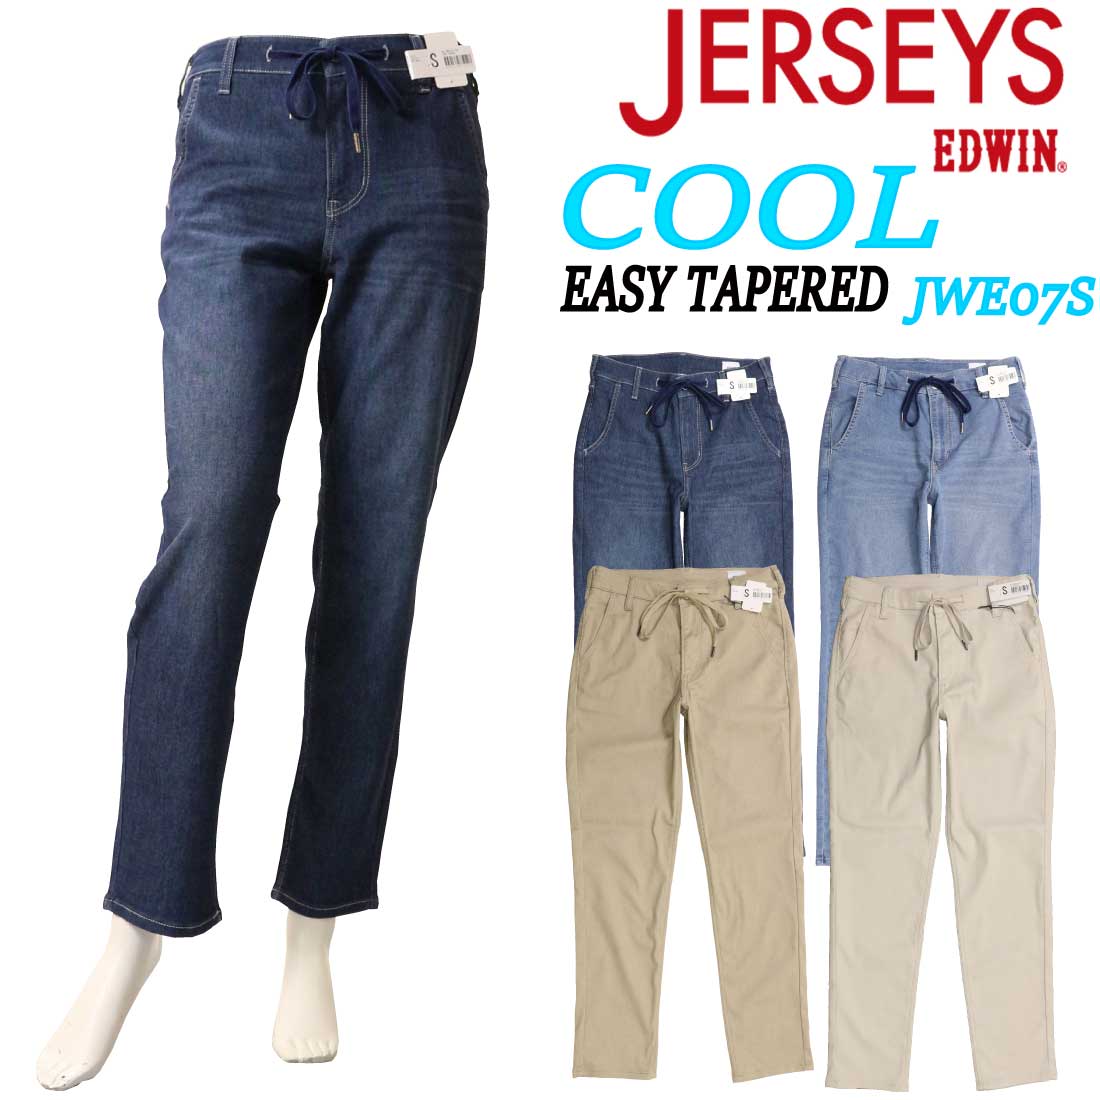 20%OFF エドウィン EDWIN ジャージーズ COOL イージー テーパード パンツ 夏 JWE07S 涼しい ラク ジーンズ デニム  レディース 股上 深め クール :edl-jwe07s:jeans藍や 通販 